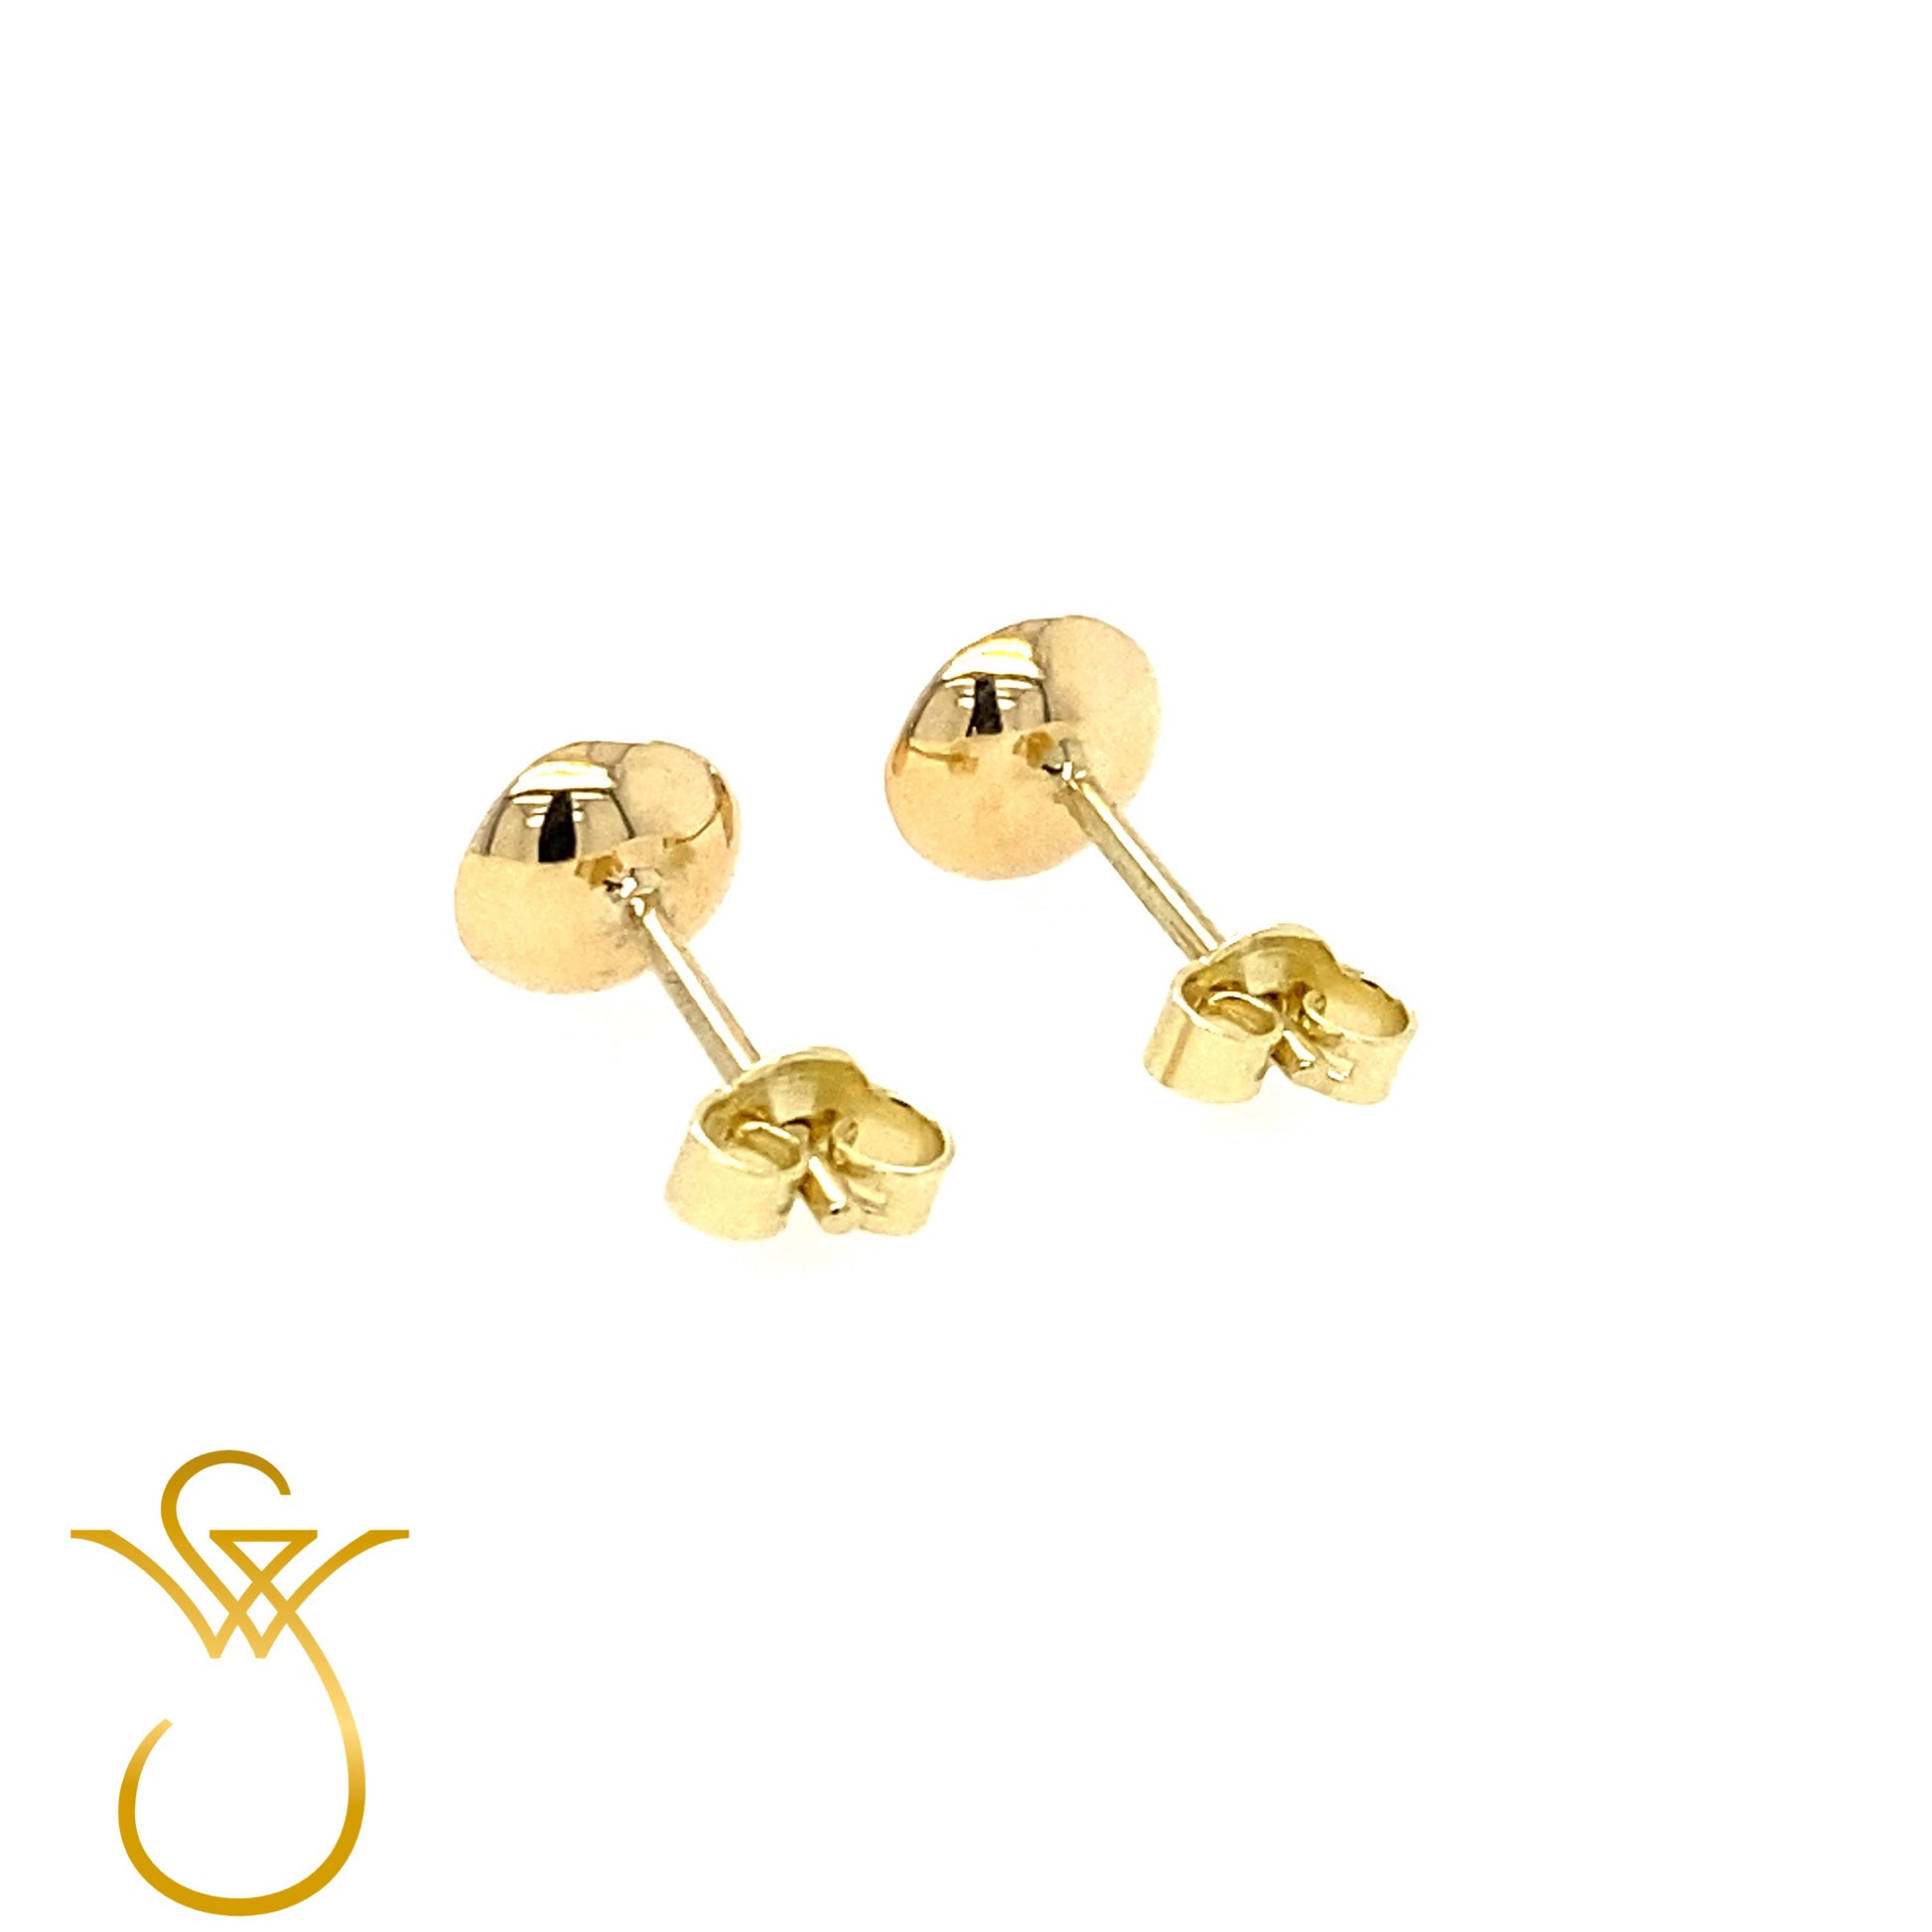 gold small cup earrings by Sanders Weyden